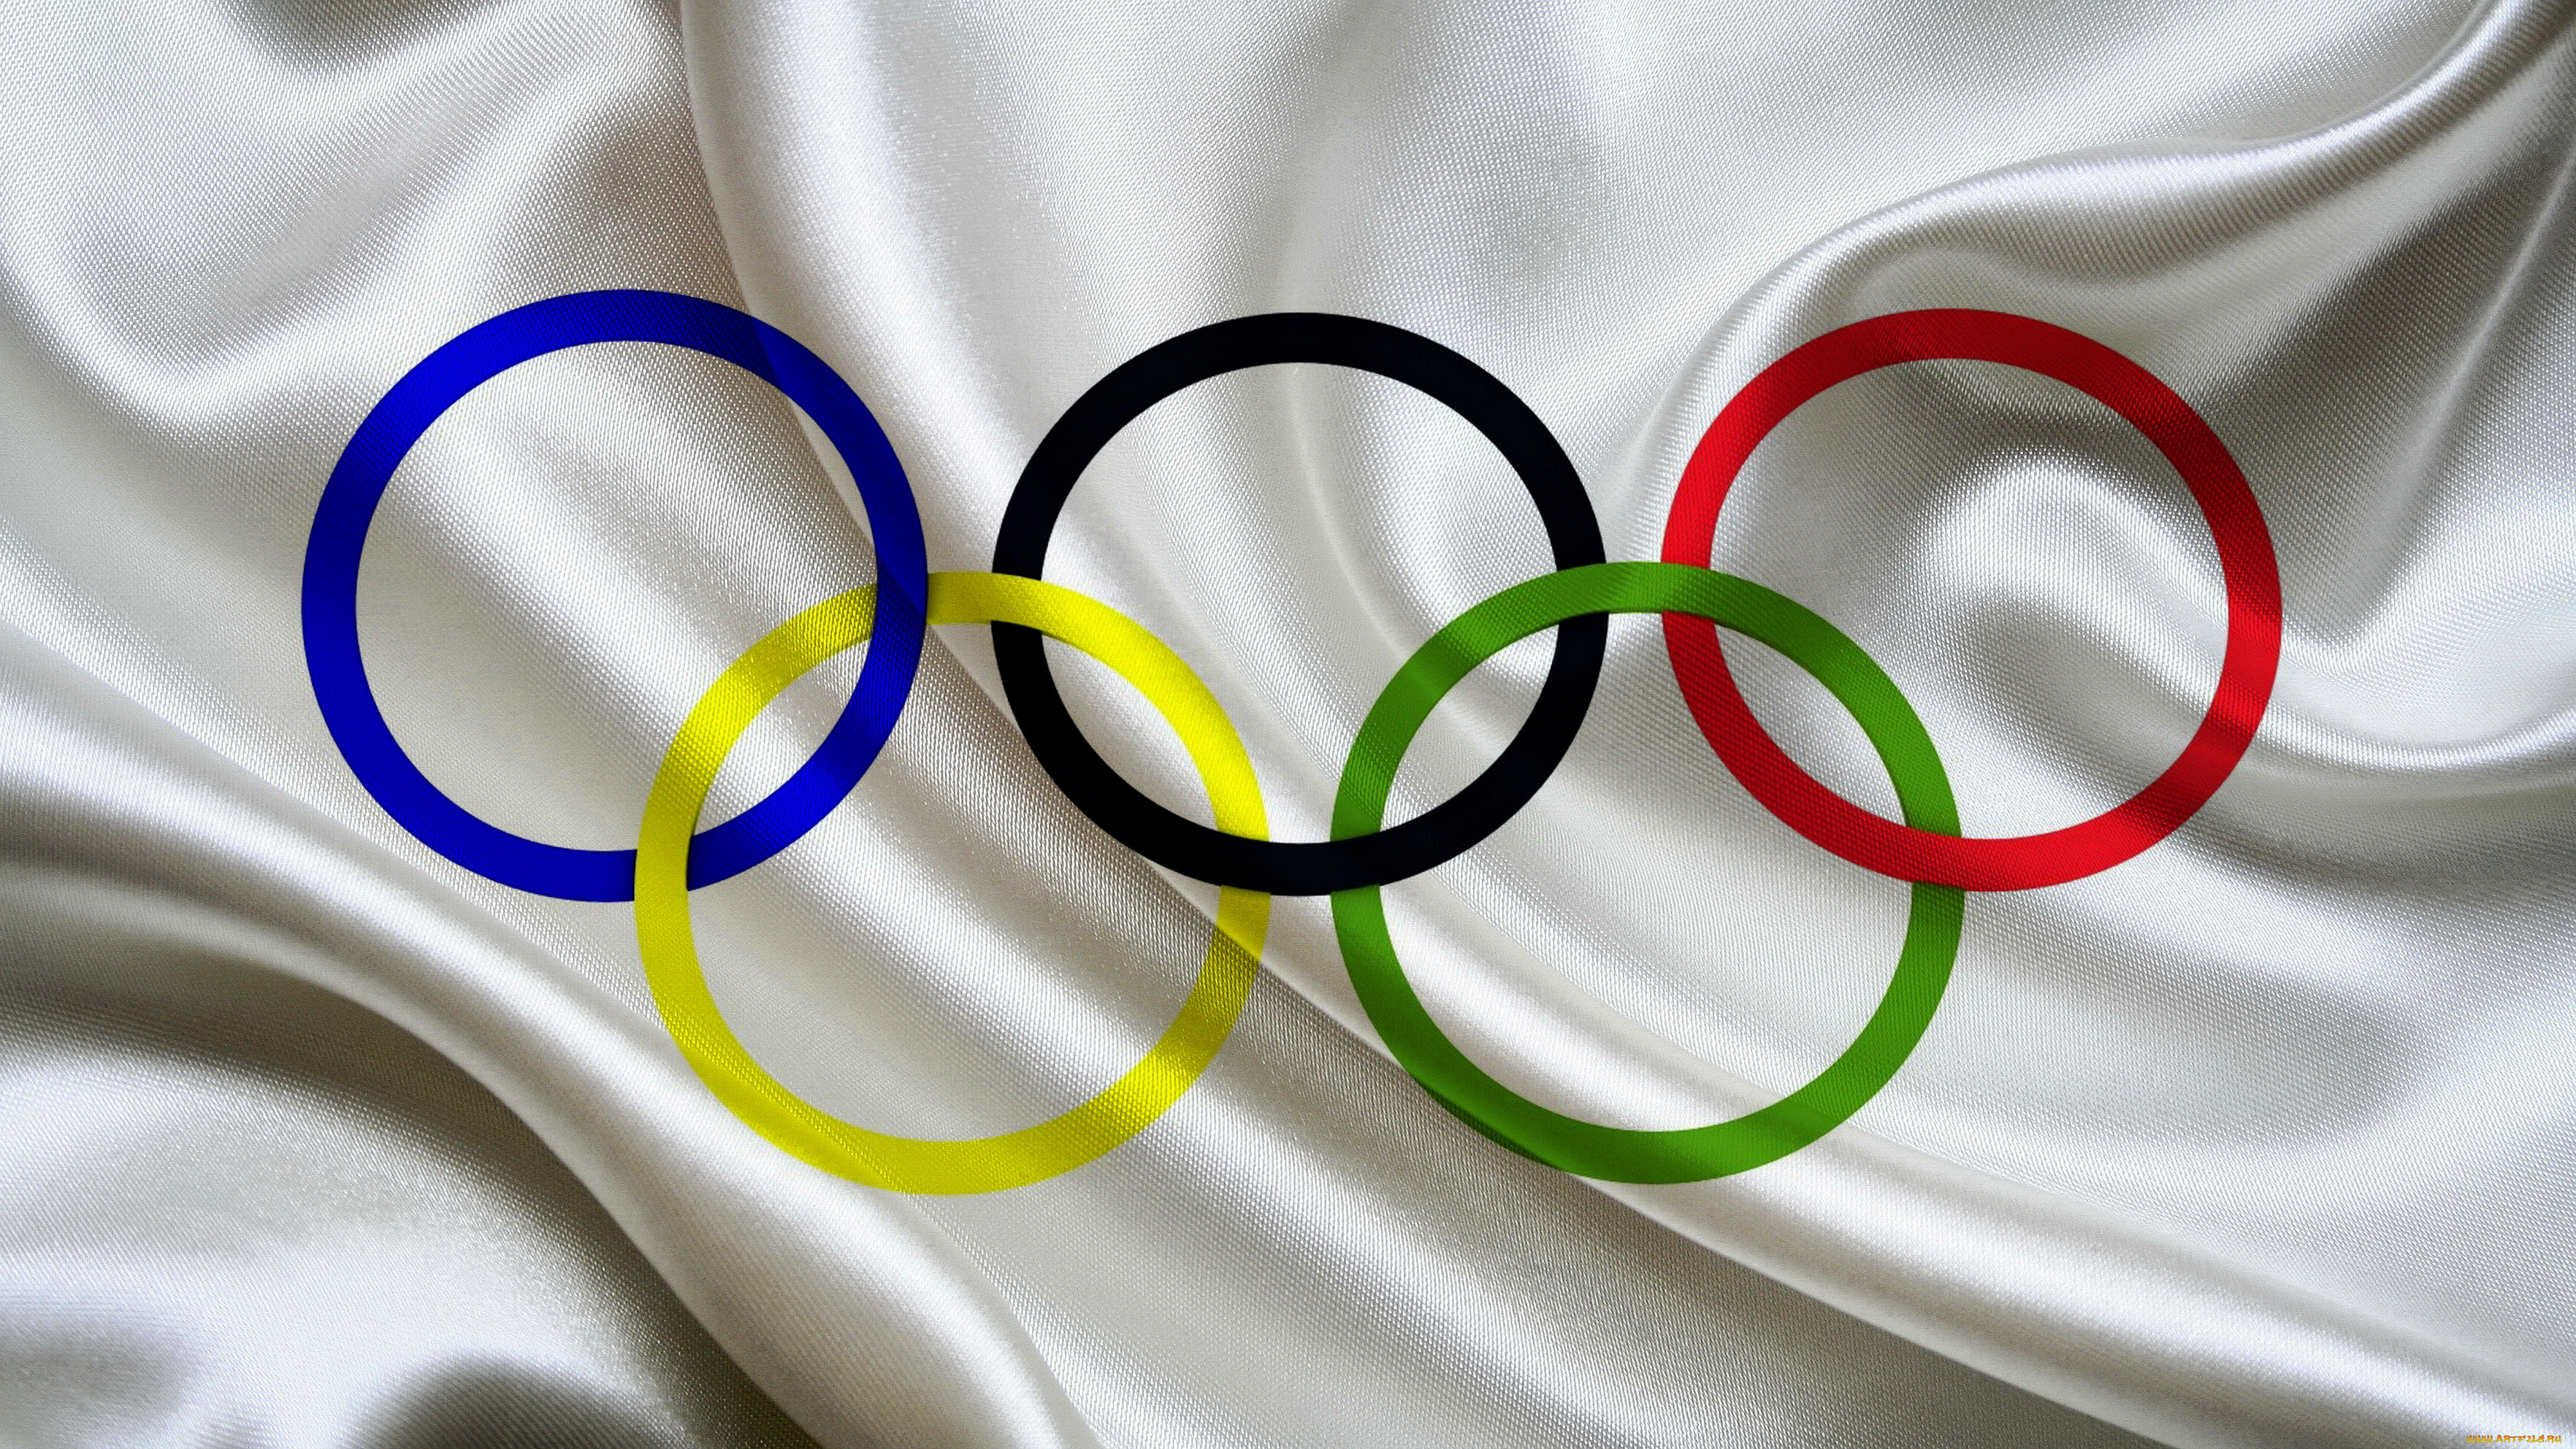 Символ олимпийских игр. Олимпийские игры Олимпийский флаг. Символ Олимпийских игр " Олимпийские кольца". Полотнище олимпийского флага. Флаг Олимп игр.